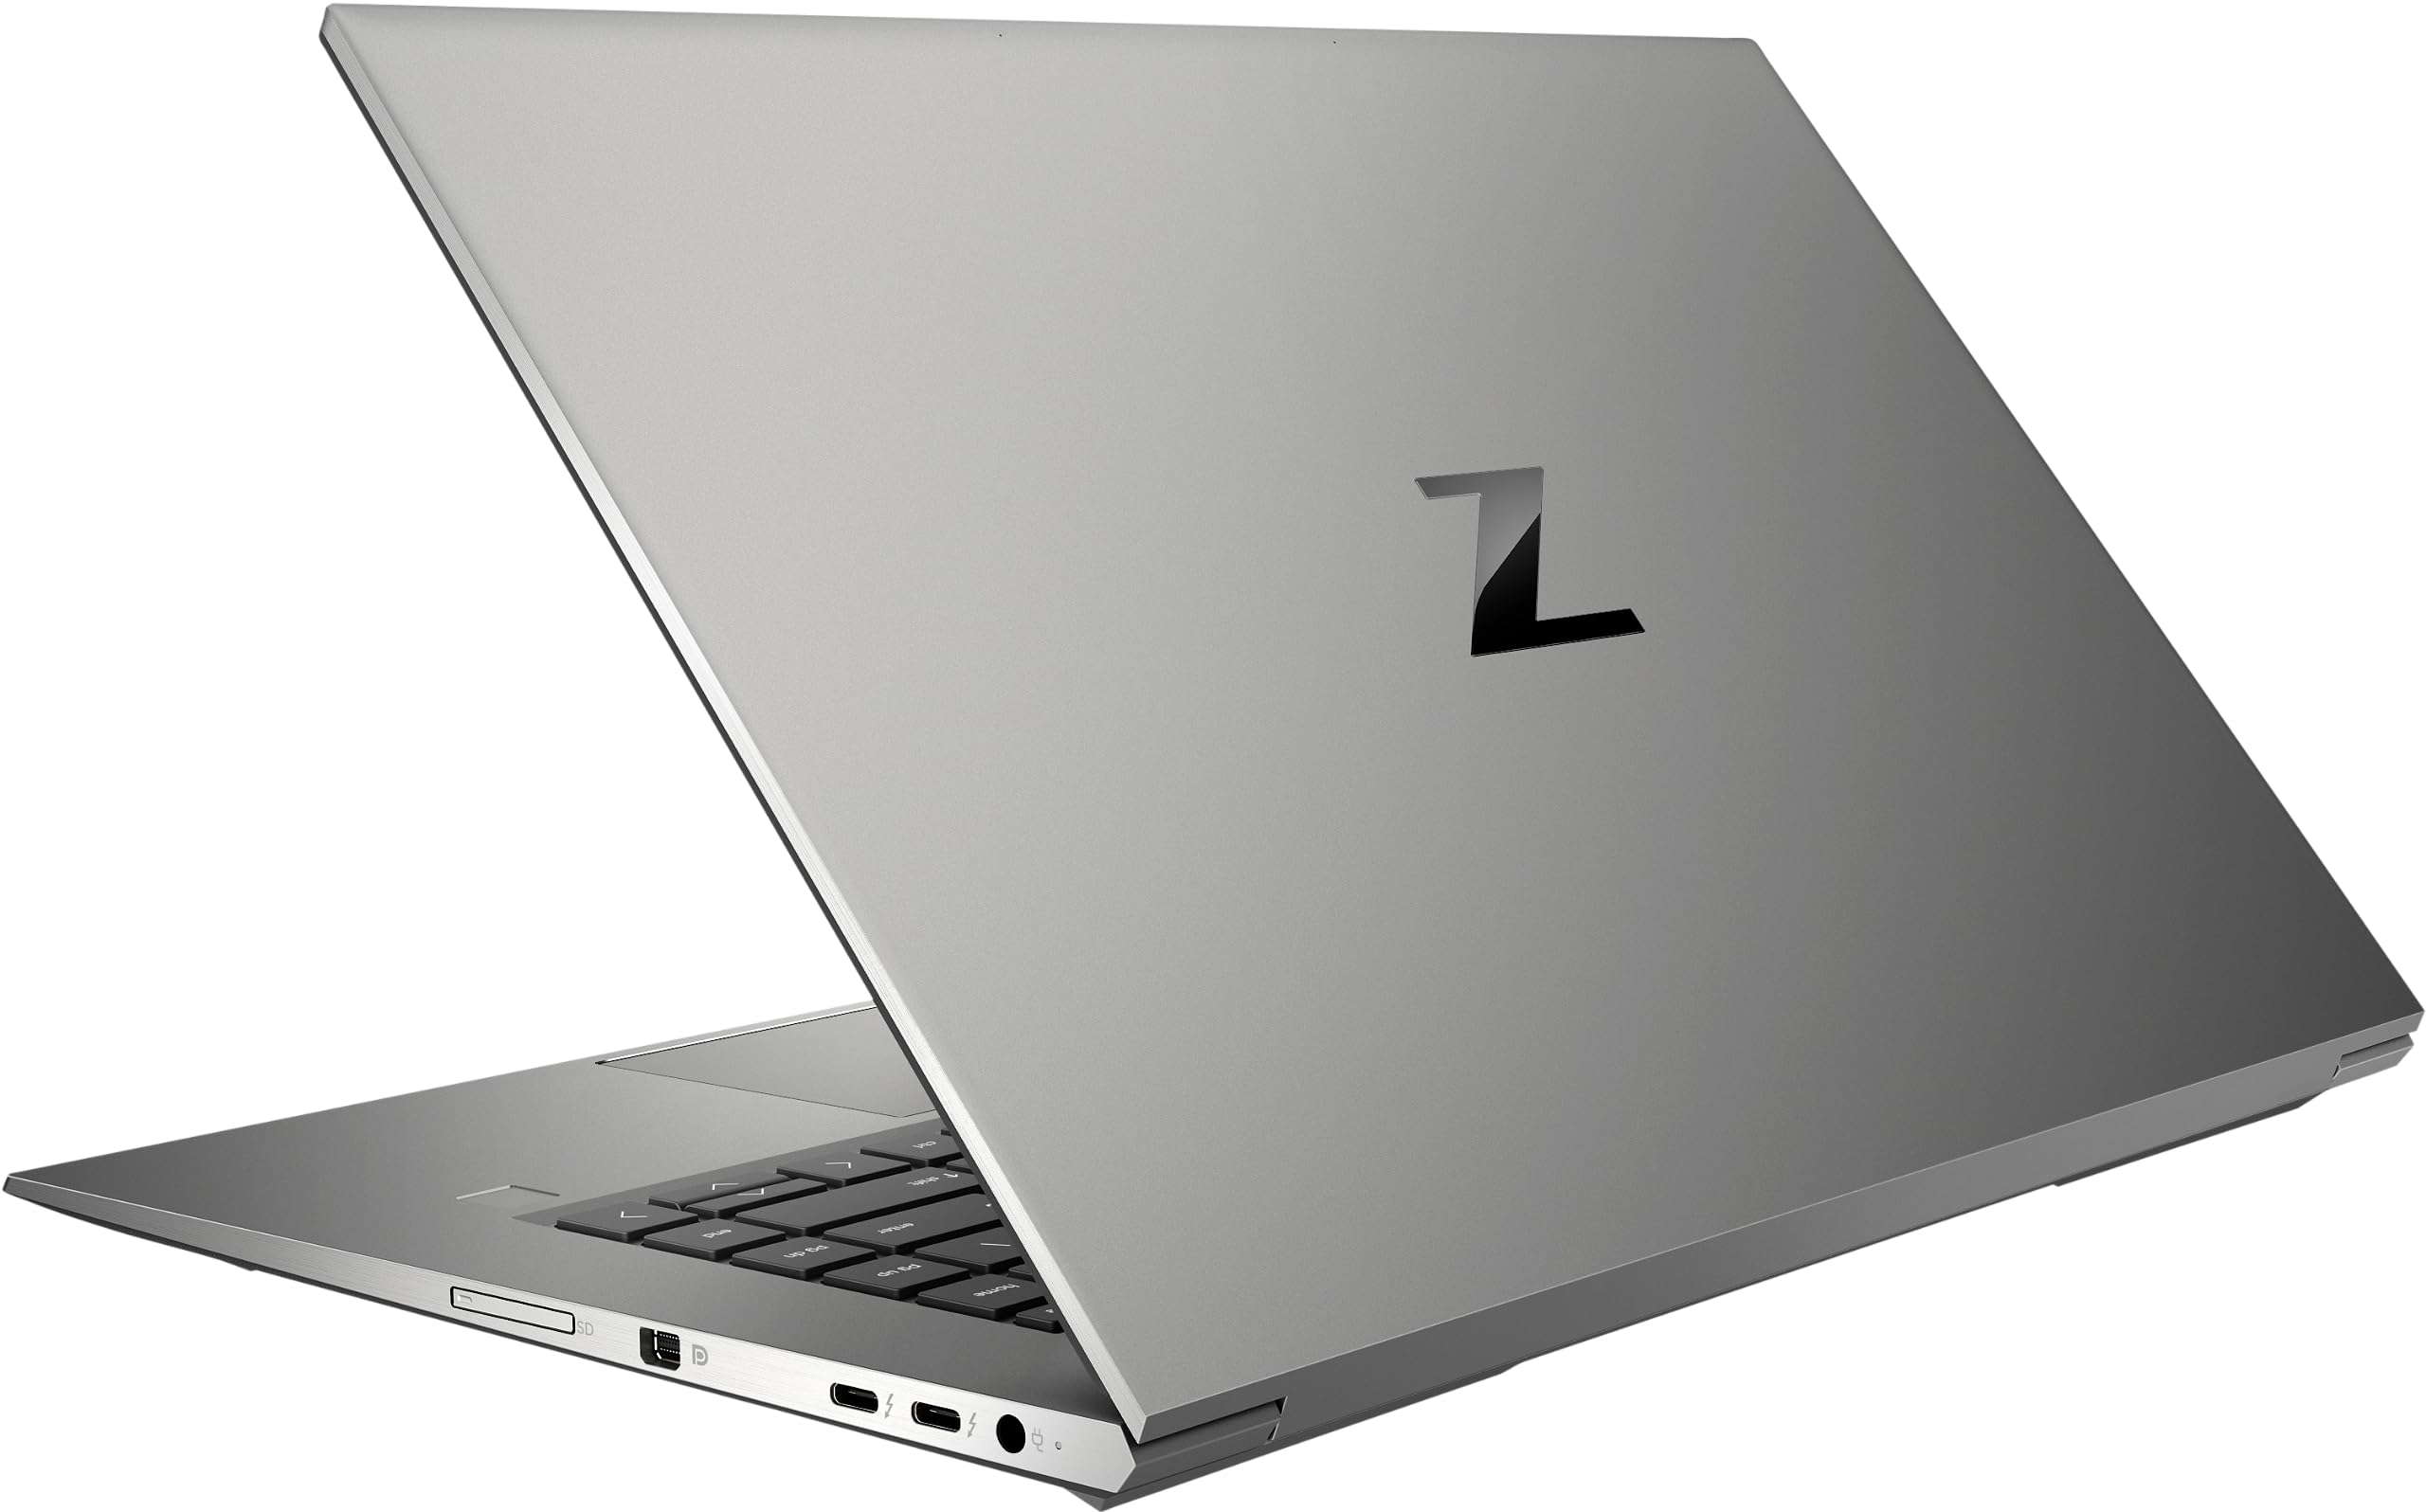 HP ZBook Create G7, Touchscreen 4K UHD, i7-10750H, Nvidia GeForce RTX 2070 MQ, 2TB PCIe Gen 4.0 x4 NVMe, 16GB DDR4, Fingerprint & SD Card Reader, WIFI 6 & BT 5, Backlit Keys, Windows 11 Pro (Renewed)